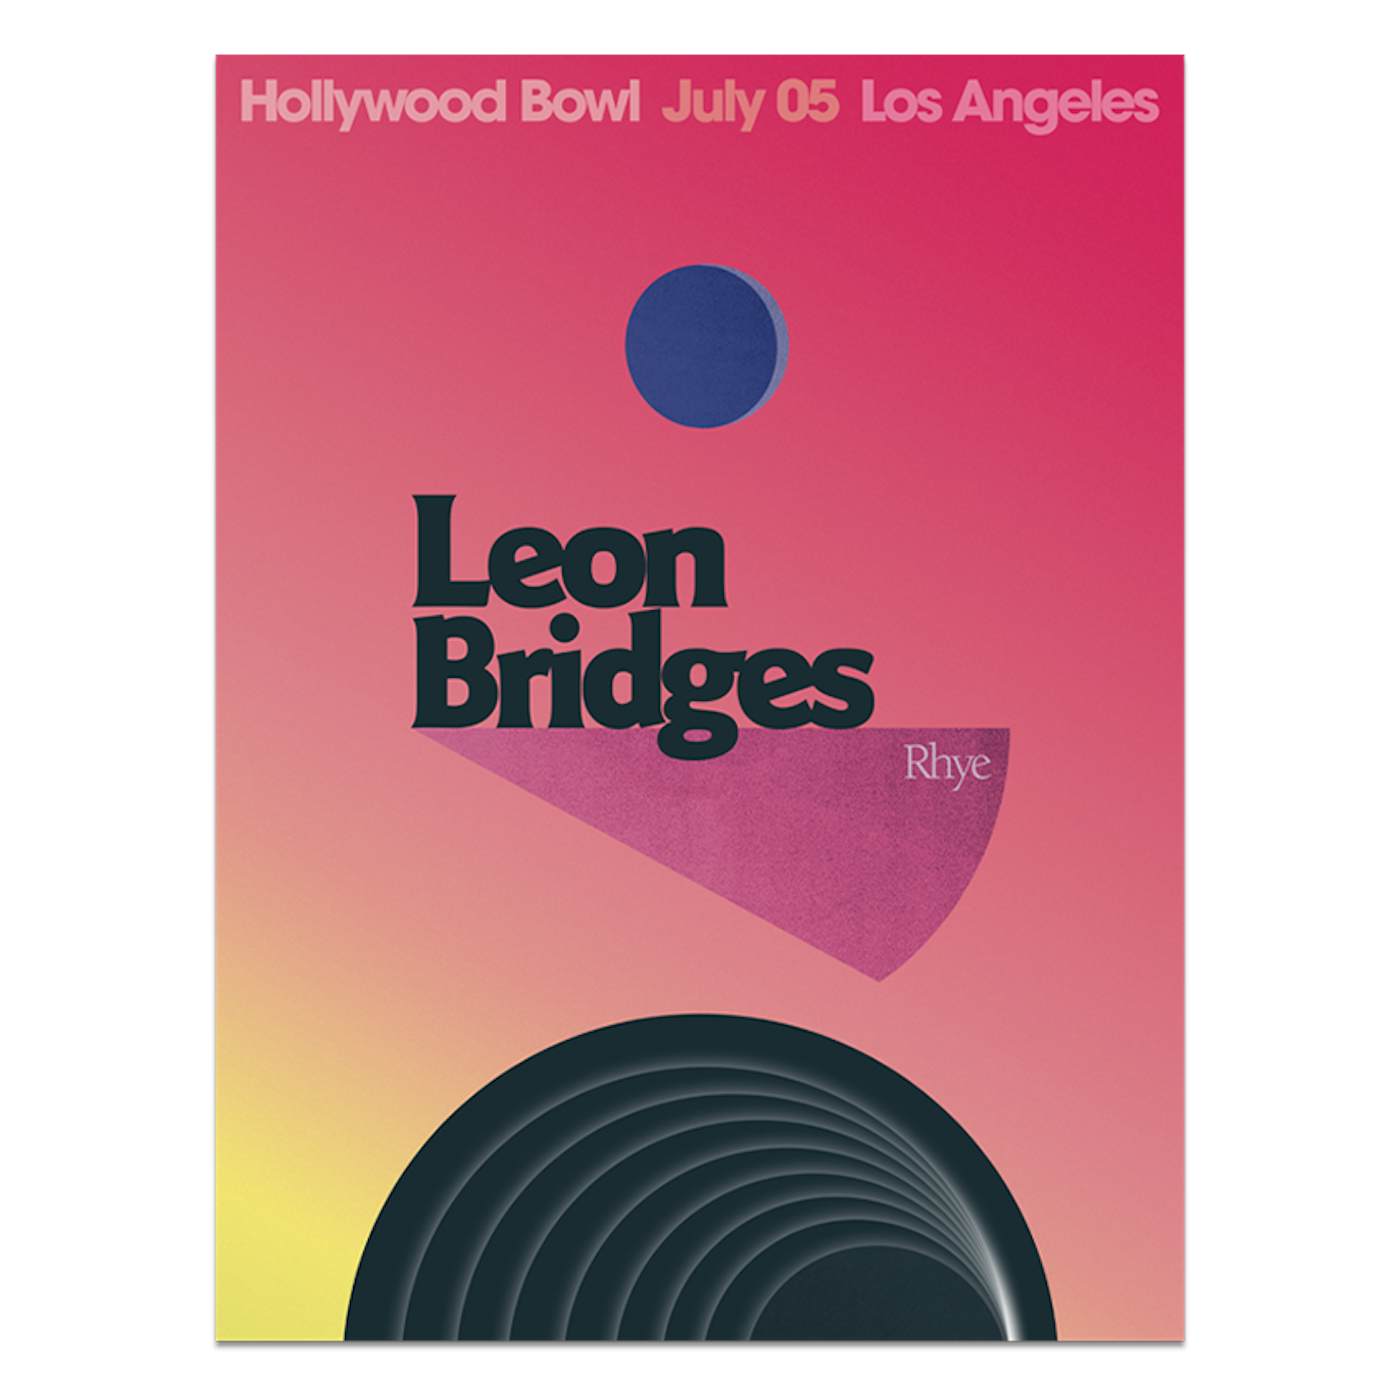 Leon Bridges Los Angeles, CA Hollywood Bowl Poster July 5, 2019